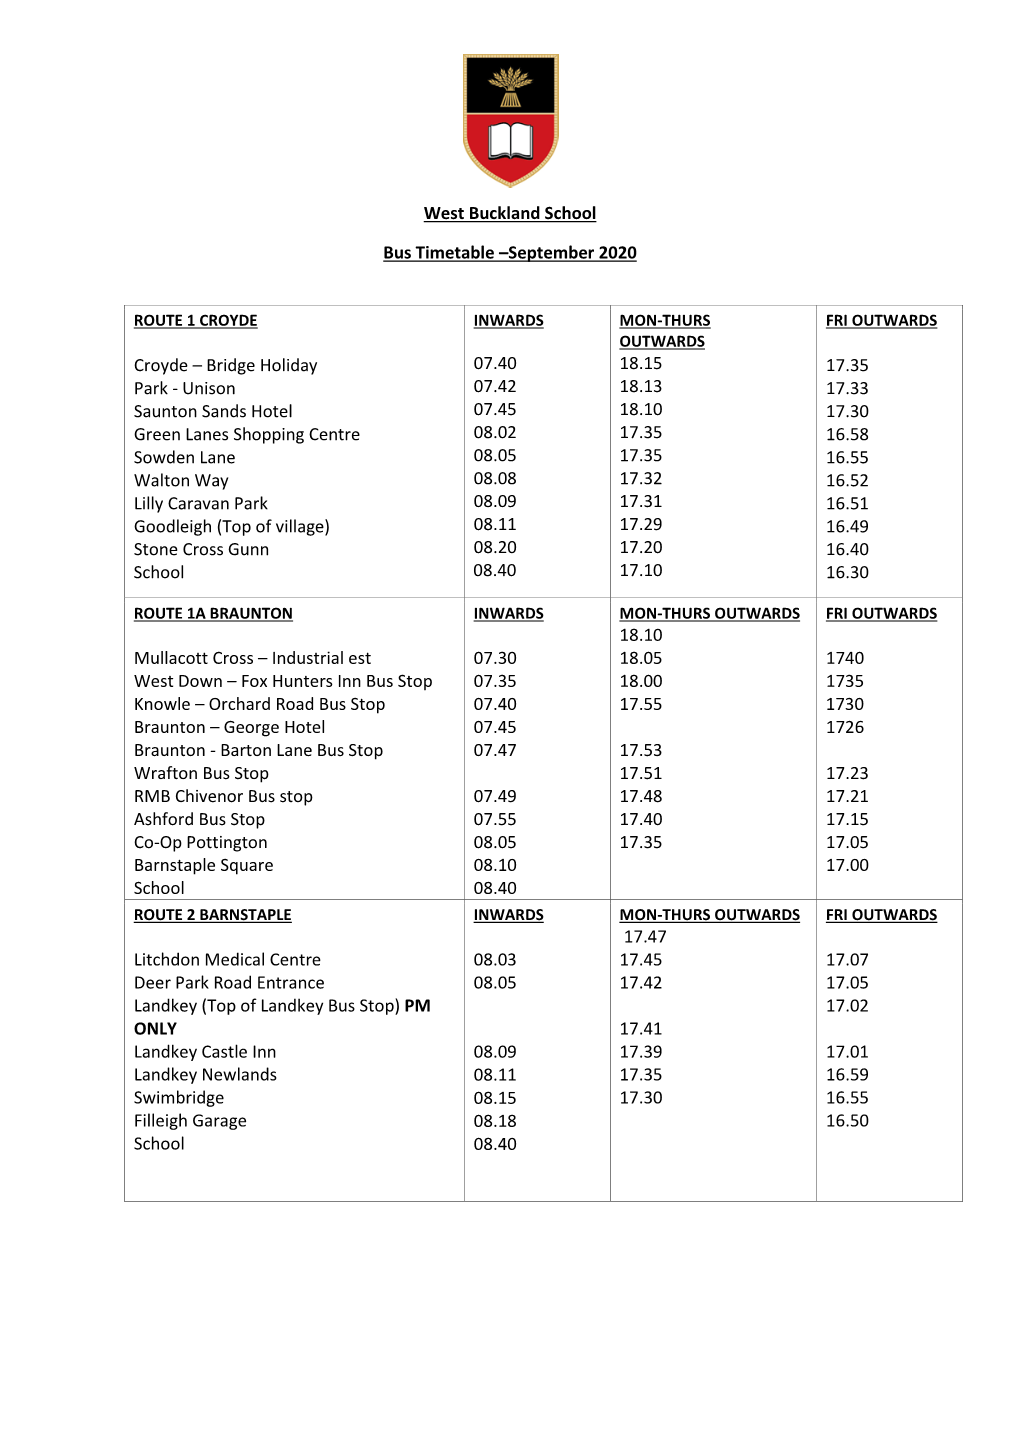 West Buckland School Bus Timetable –September 2020 Croyde – Bridge